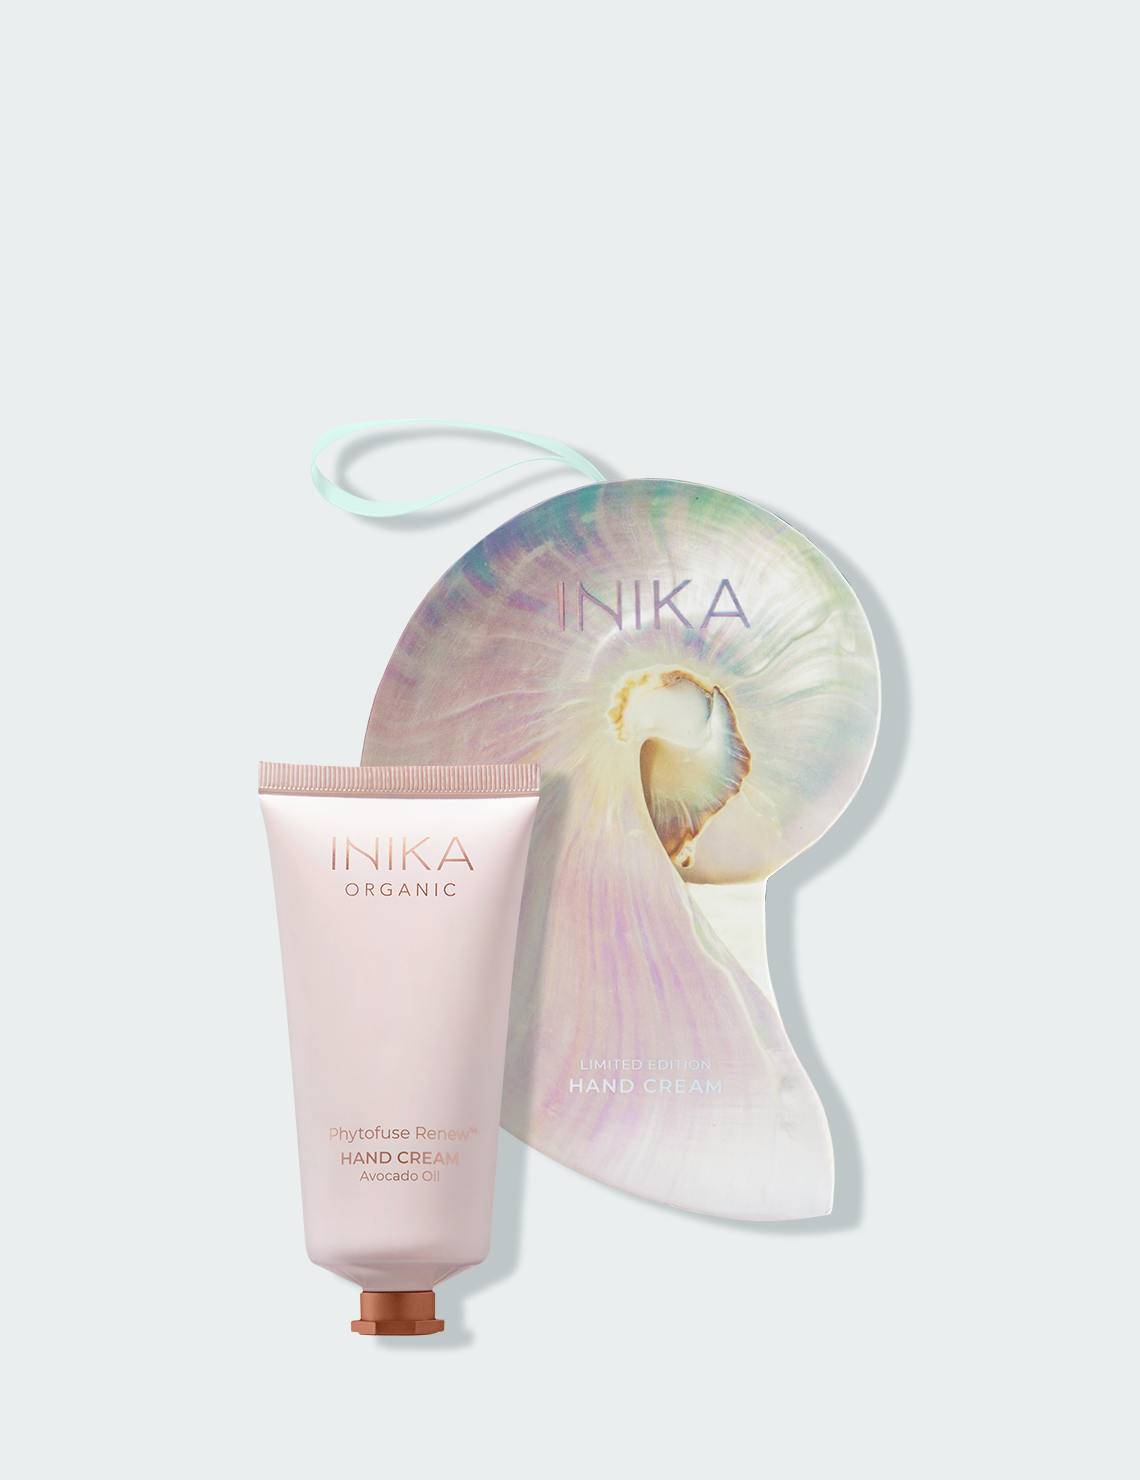 Limited Edition Hand Cream | INIKA Organic | 01